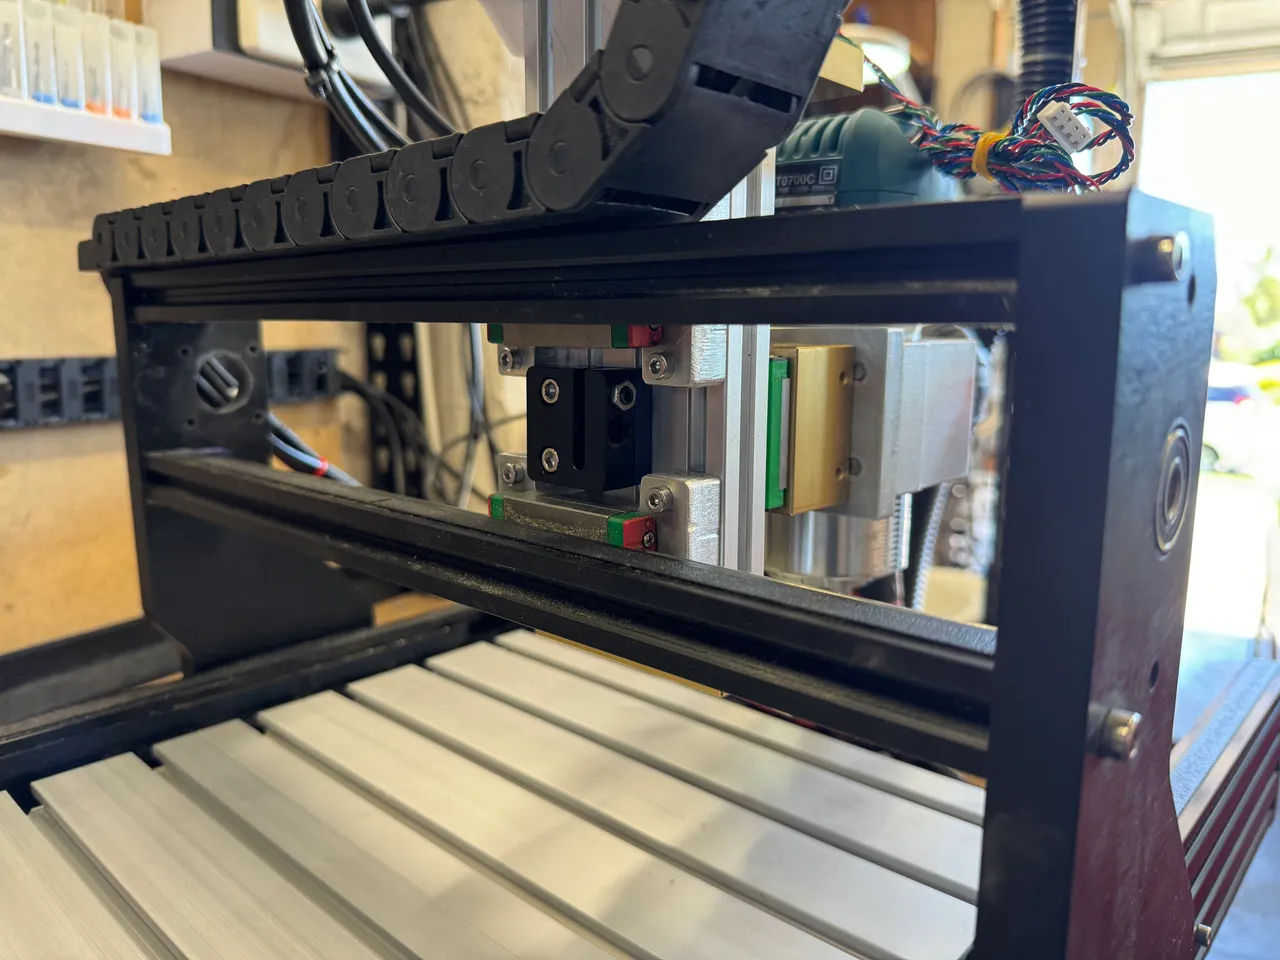 CNC 3018 Pro Engraving Machine – The 3D Printer Store